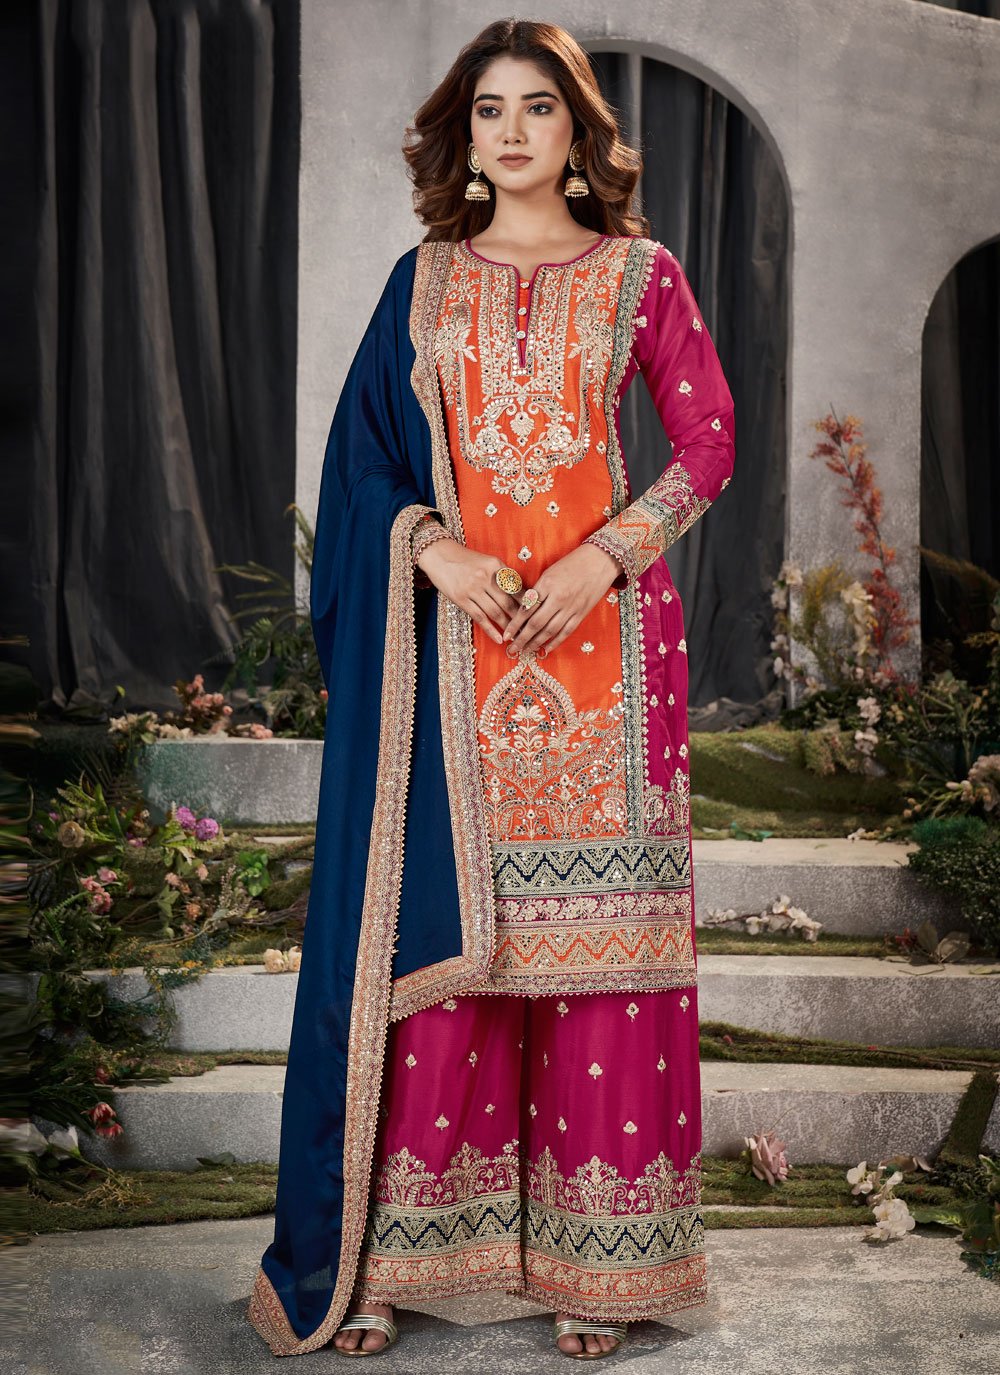 New Original Khaadi Stitched Kameez kurti Lawn 2 Piece Suit Pakistani  Indian S | eBay